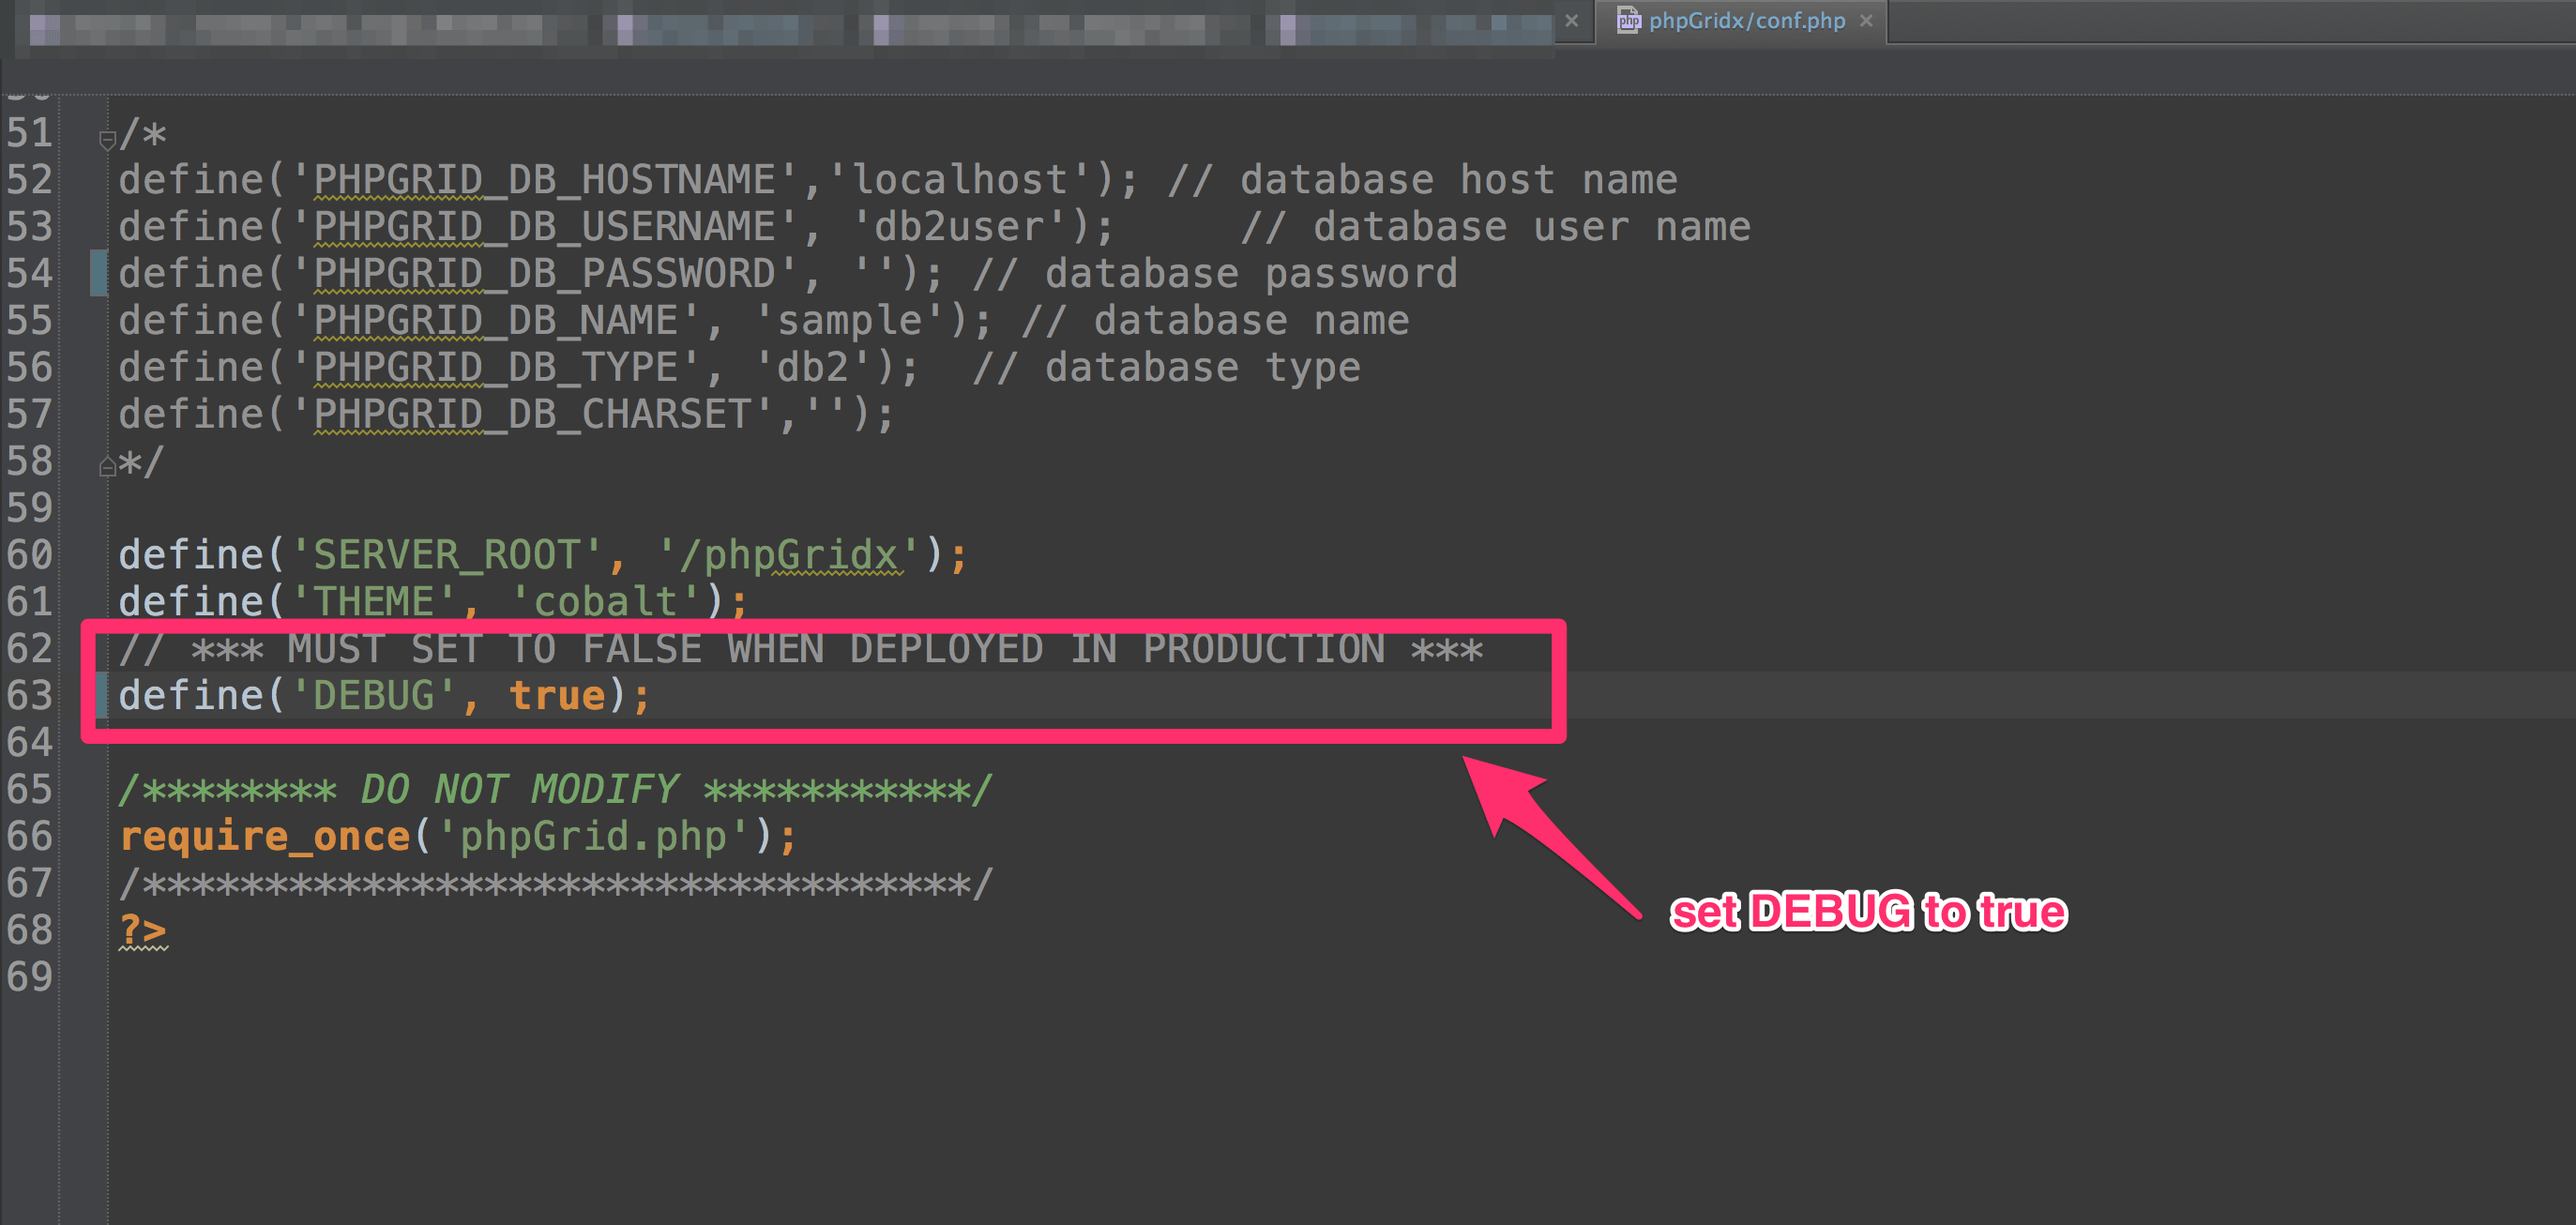 enable java script debugger